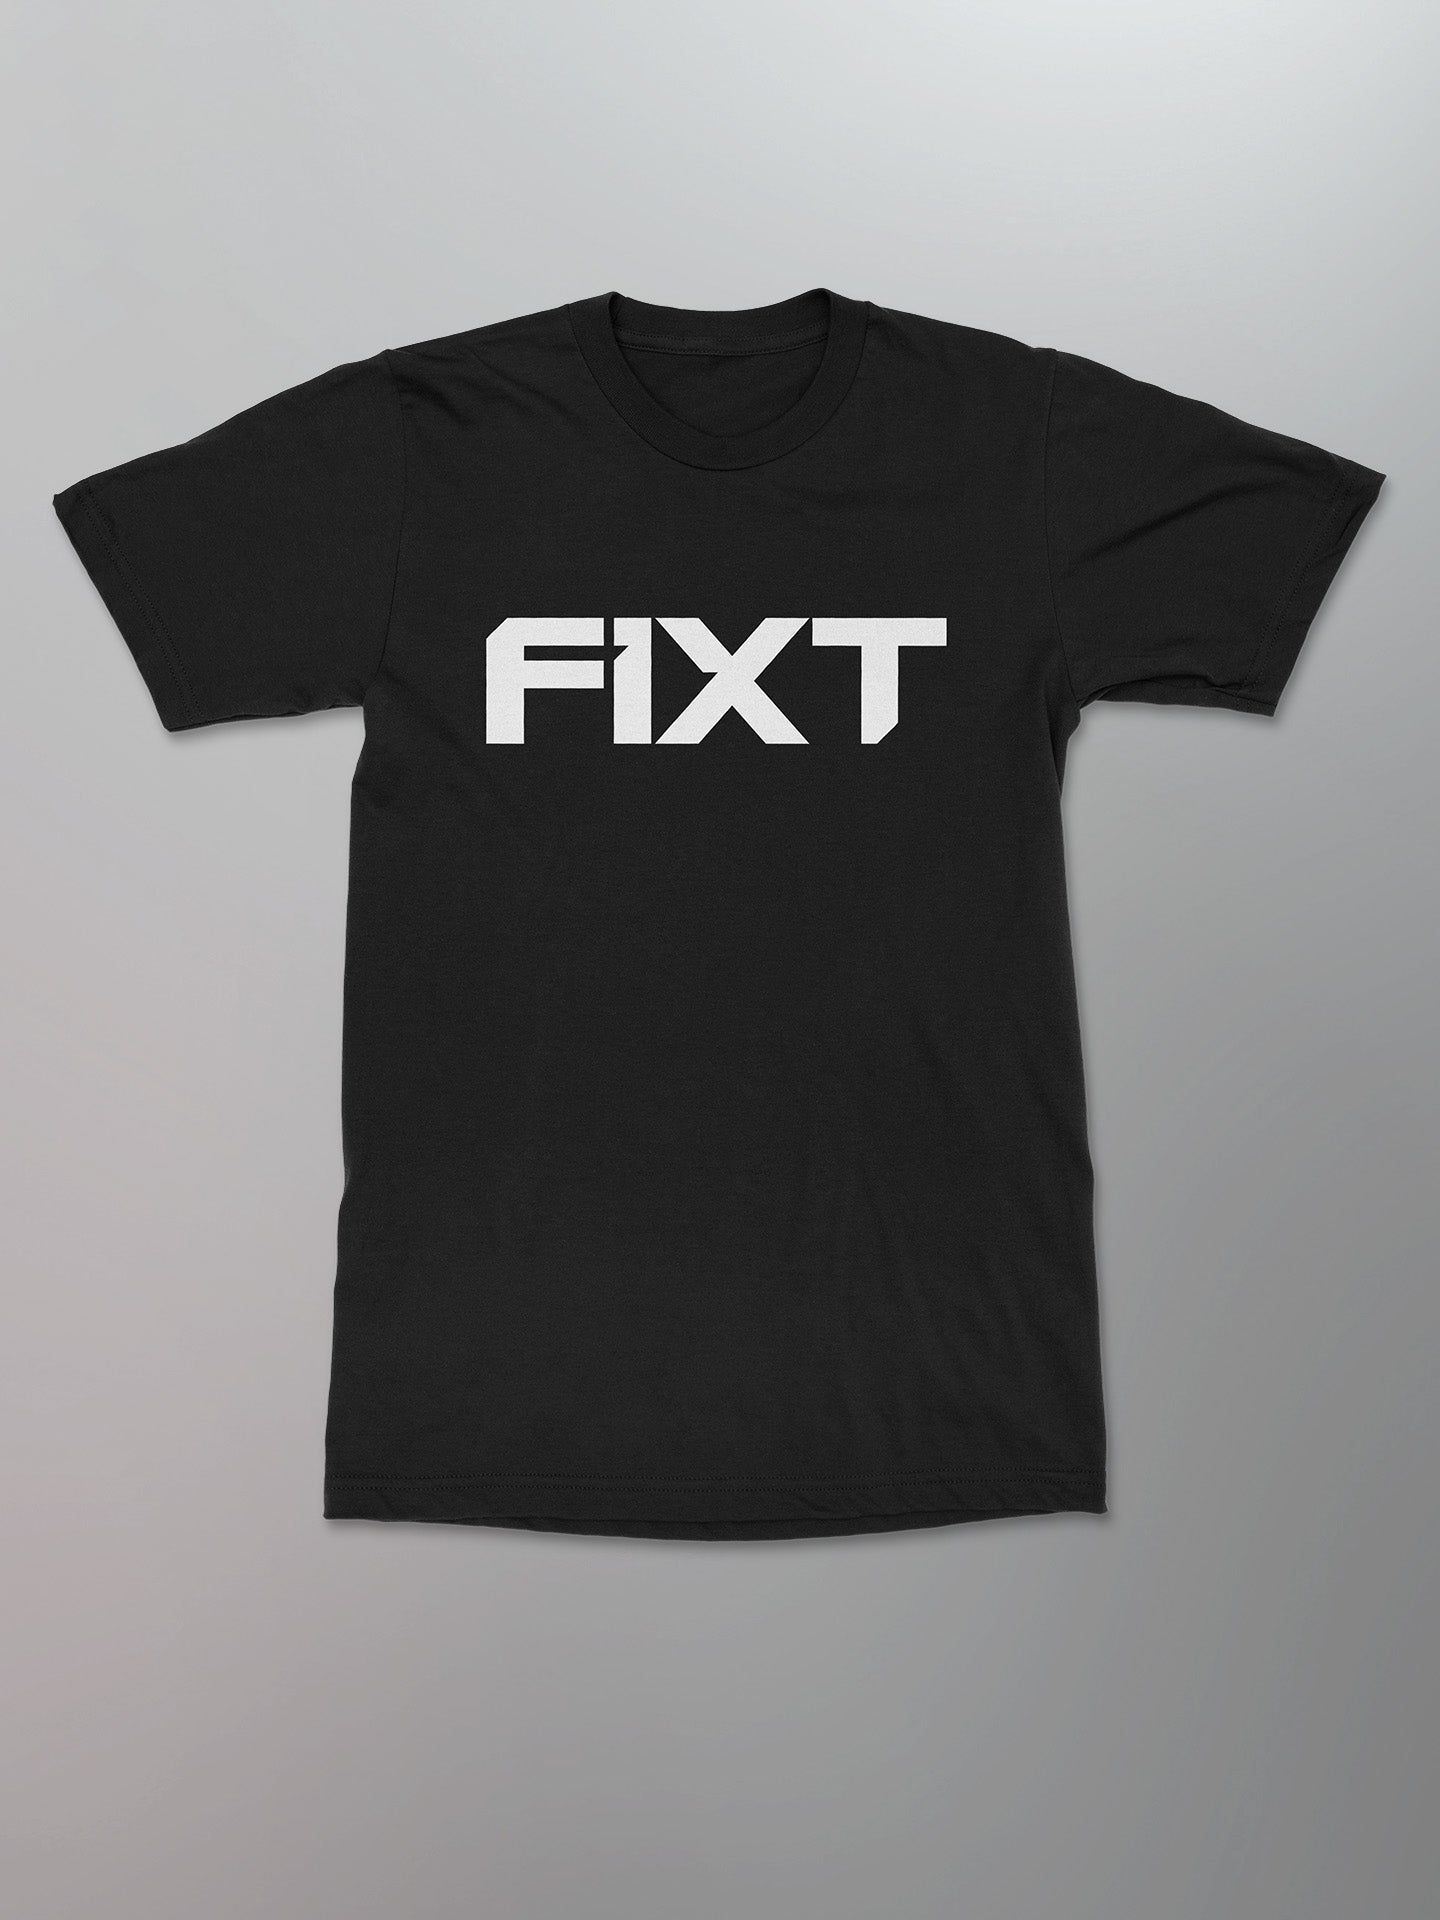 FiXT - Logo Shirt [Black]